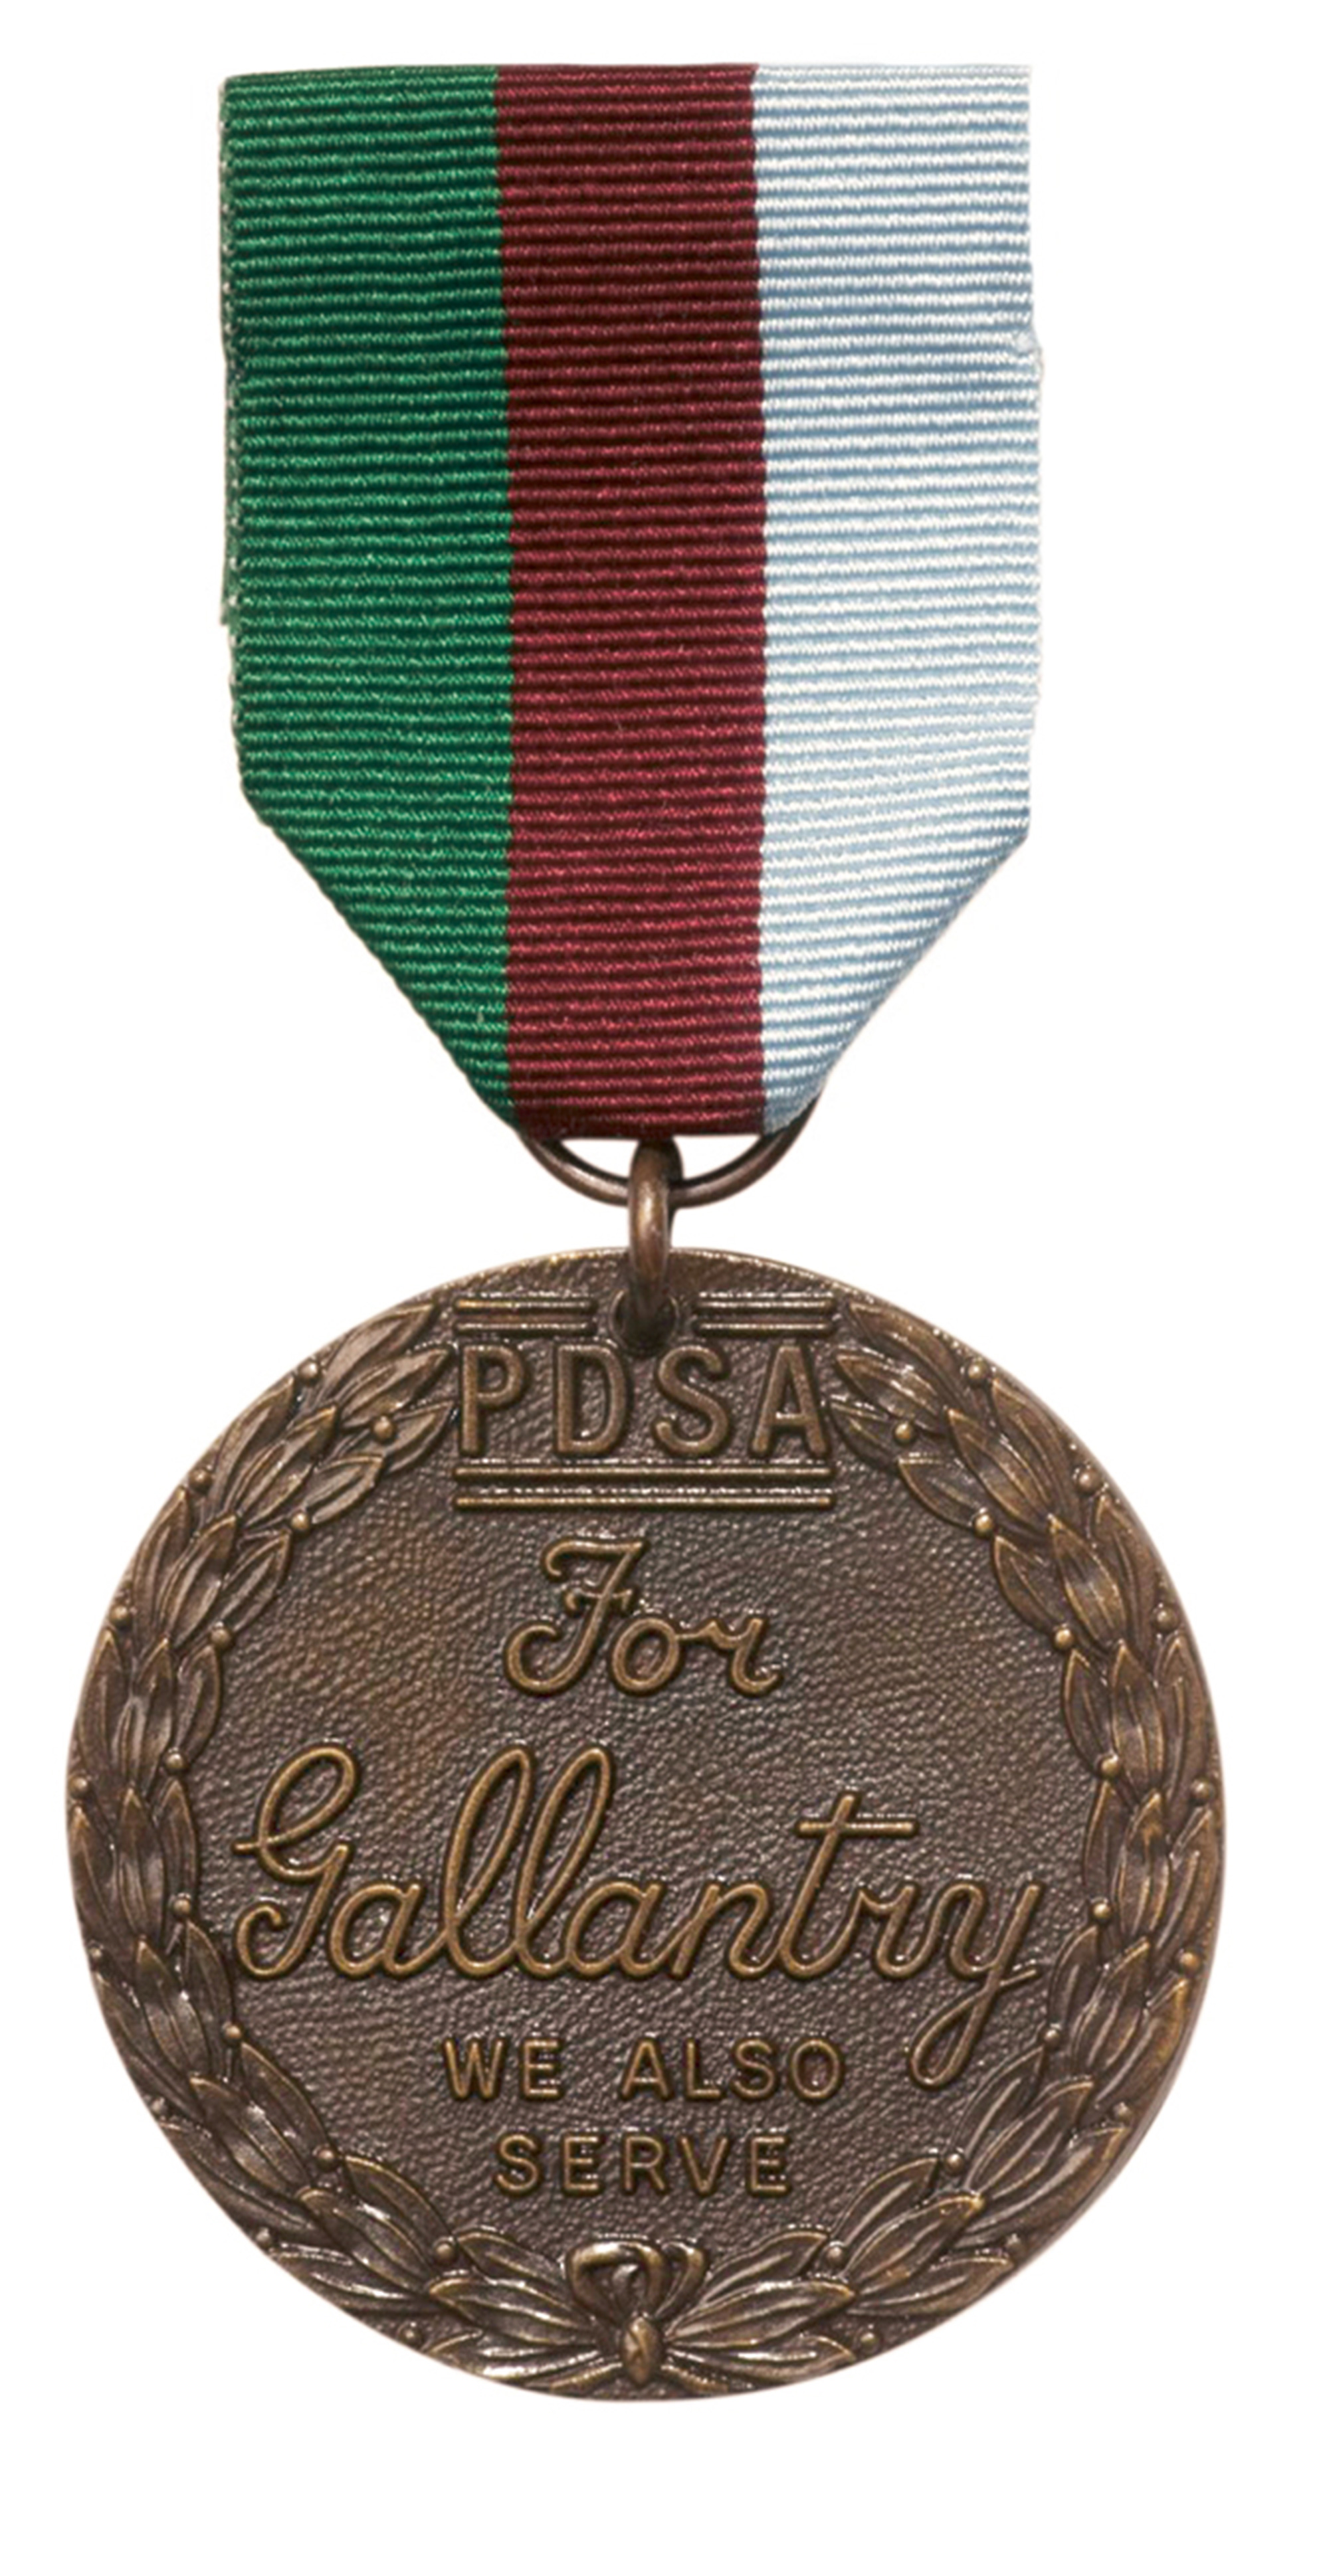 An image of the PDSA Dickin Medal.